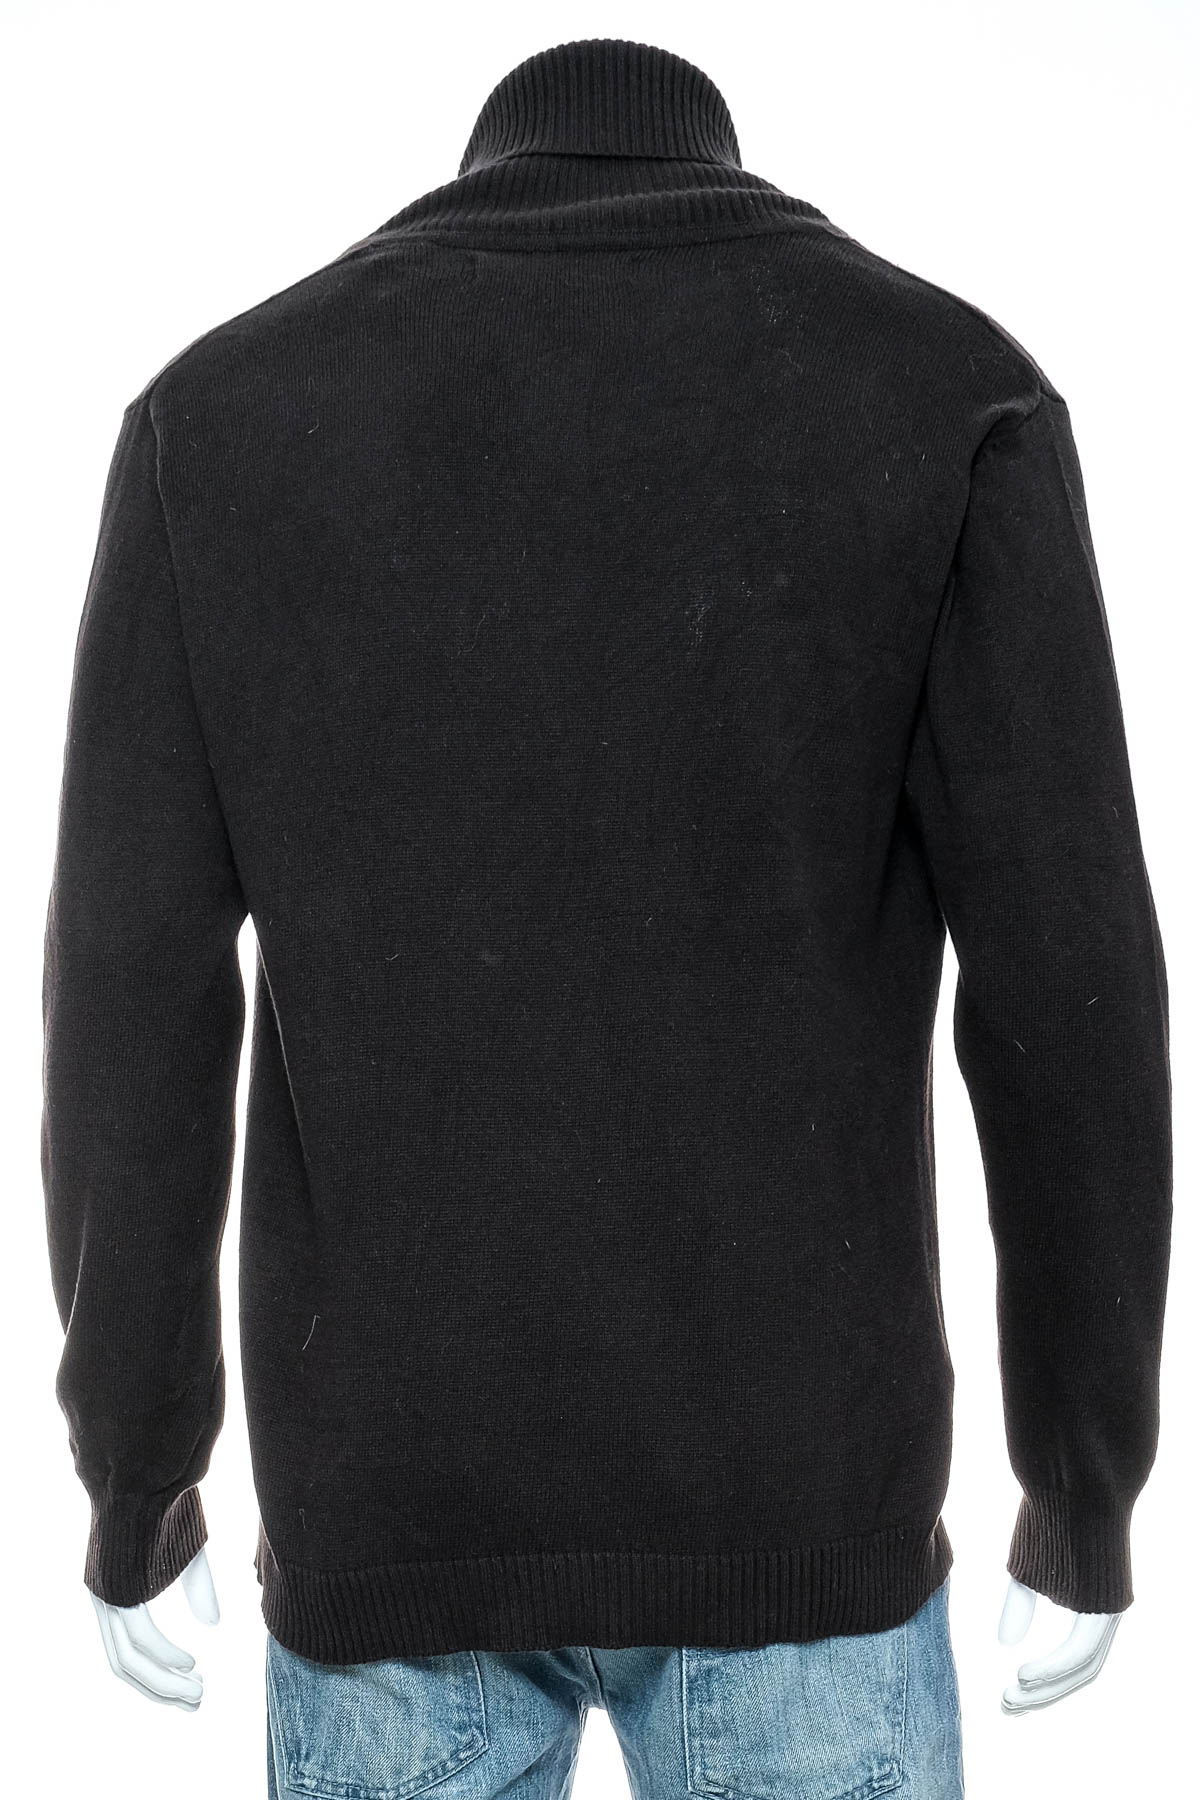 Men's sweater - Perry Ellis - 1